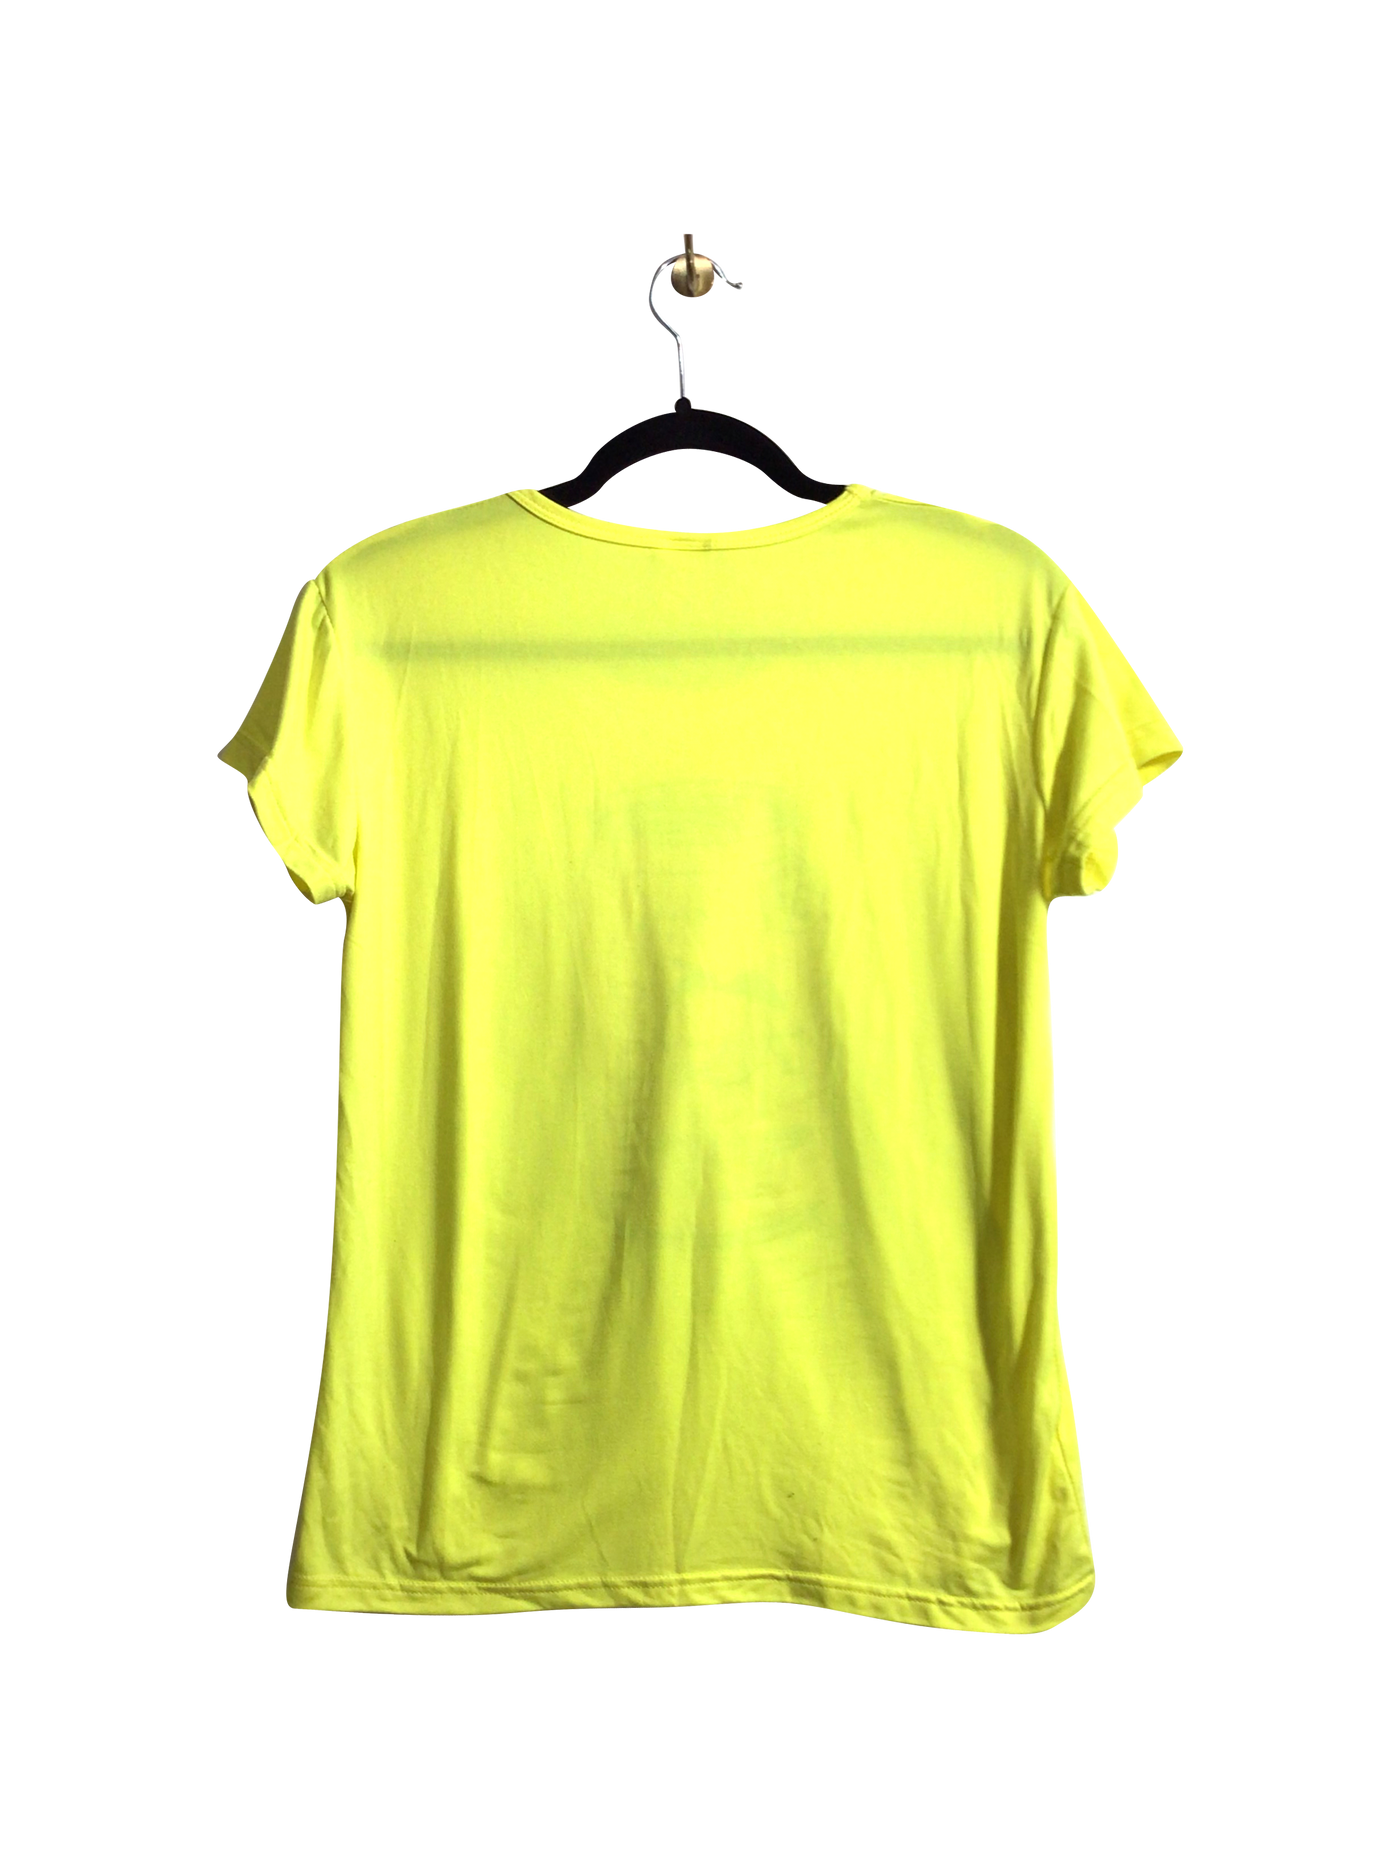 UNBRANDED Women T-Shirts Regular fit in Yellow - Size 2XL | 8.99 $ KOOP